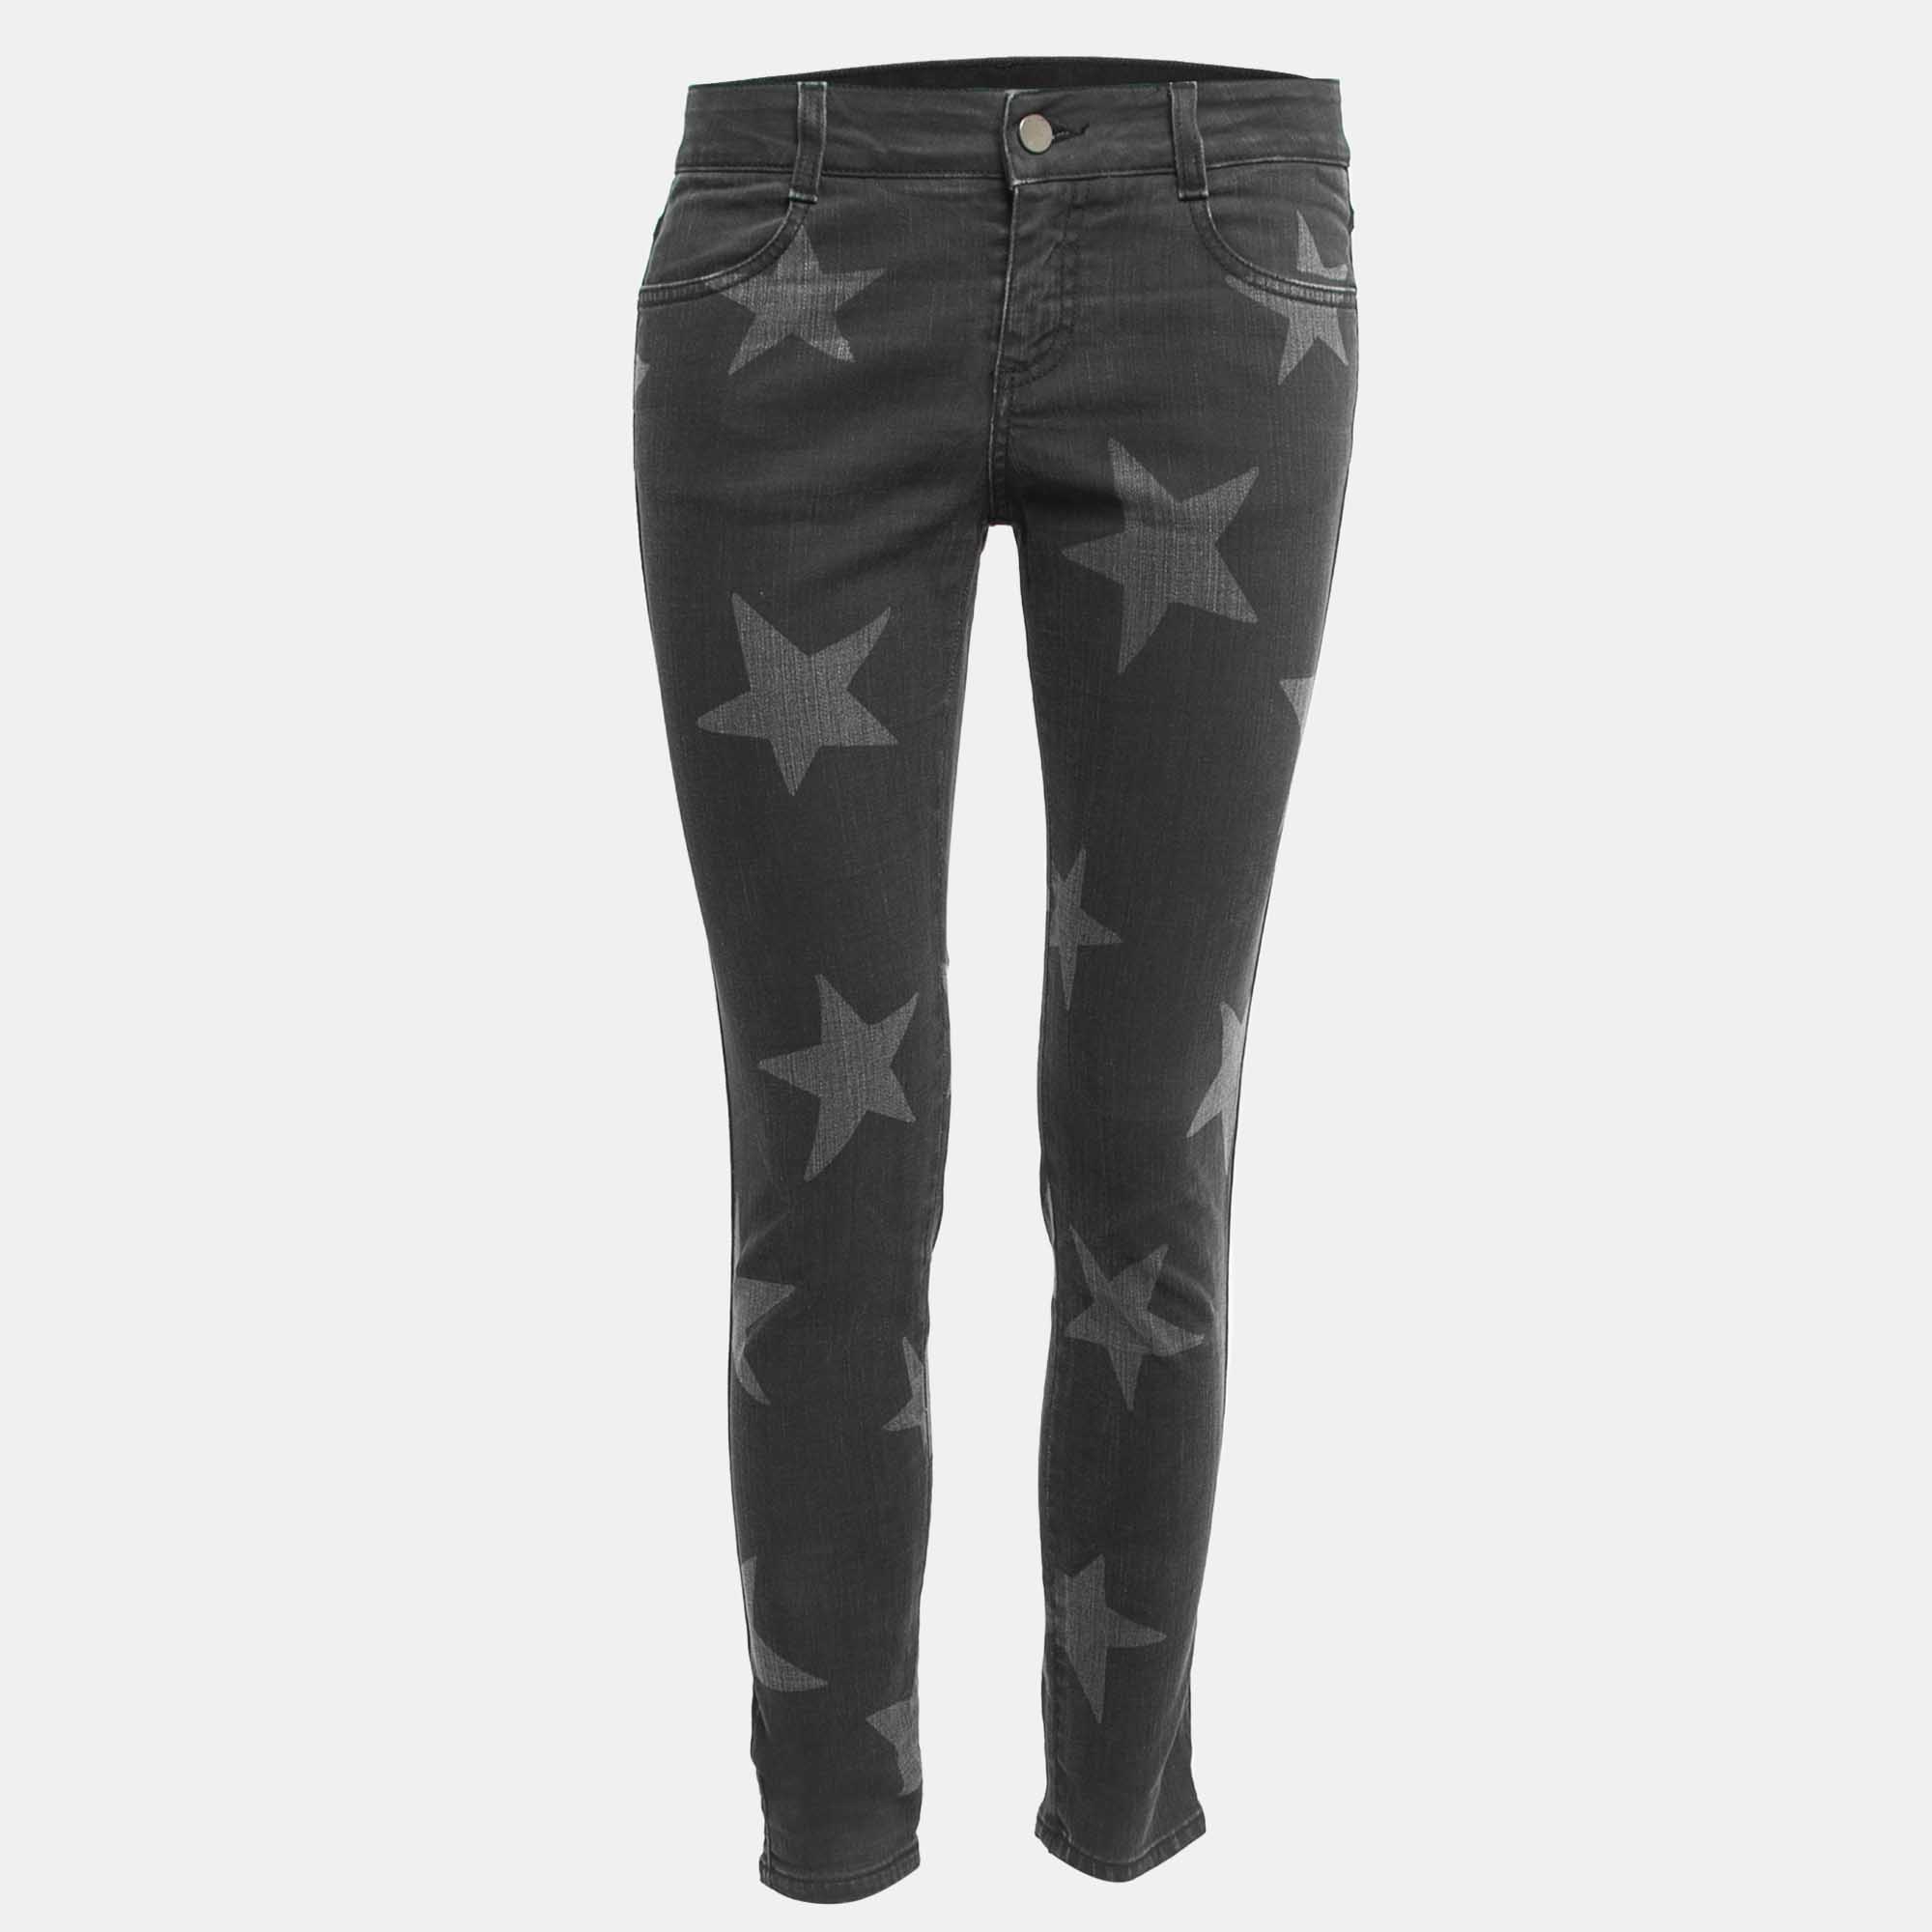 Stella McCartney Grey Star Print Denim Skinny Jeans M Waist 27